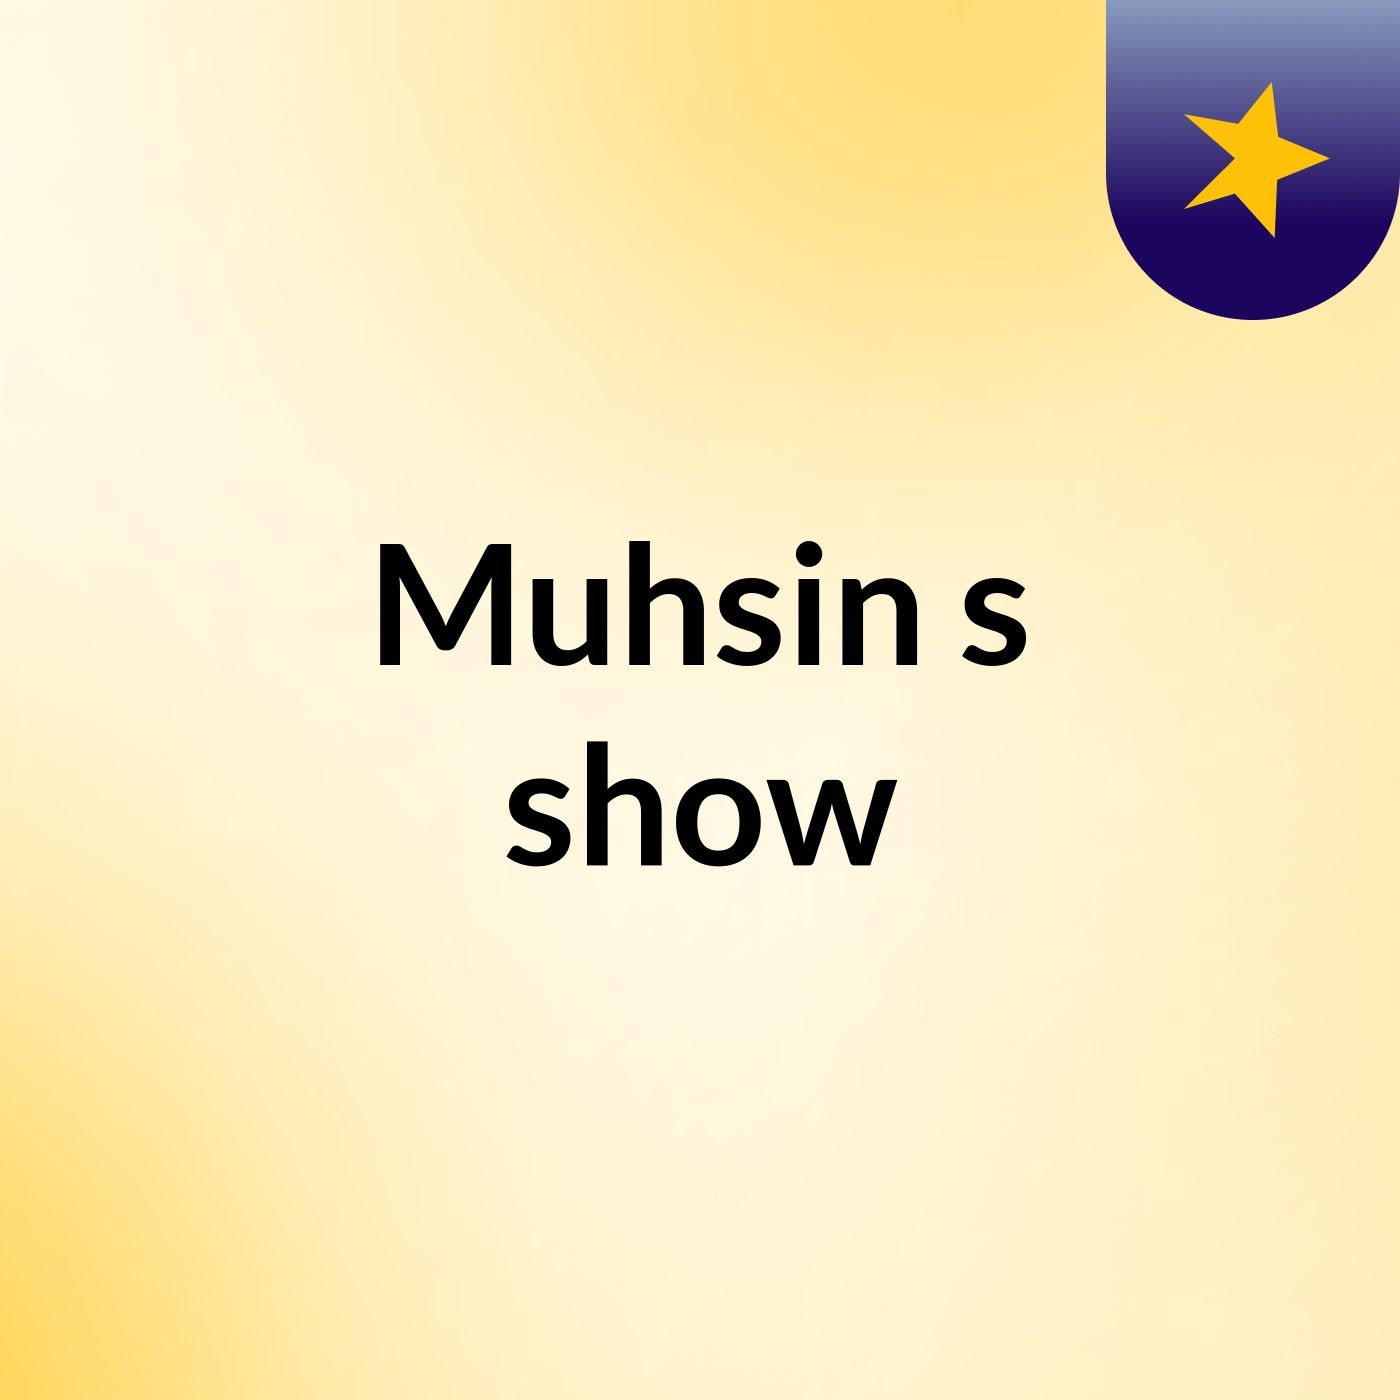 Muhsin's show